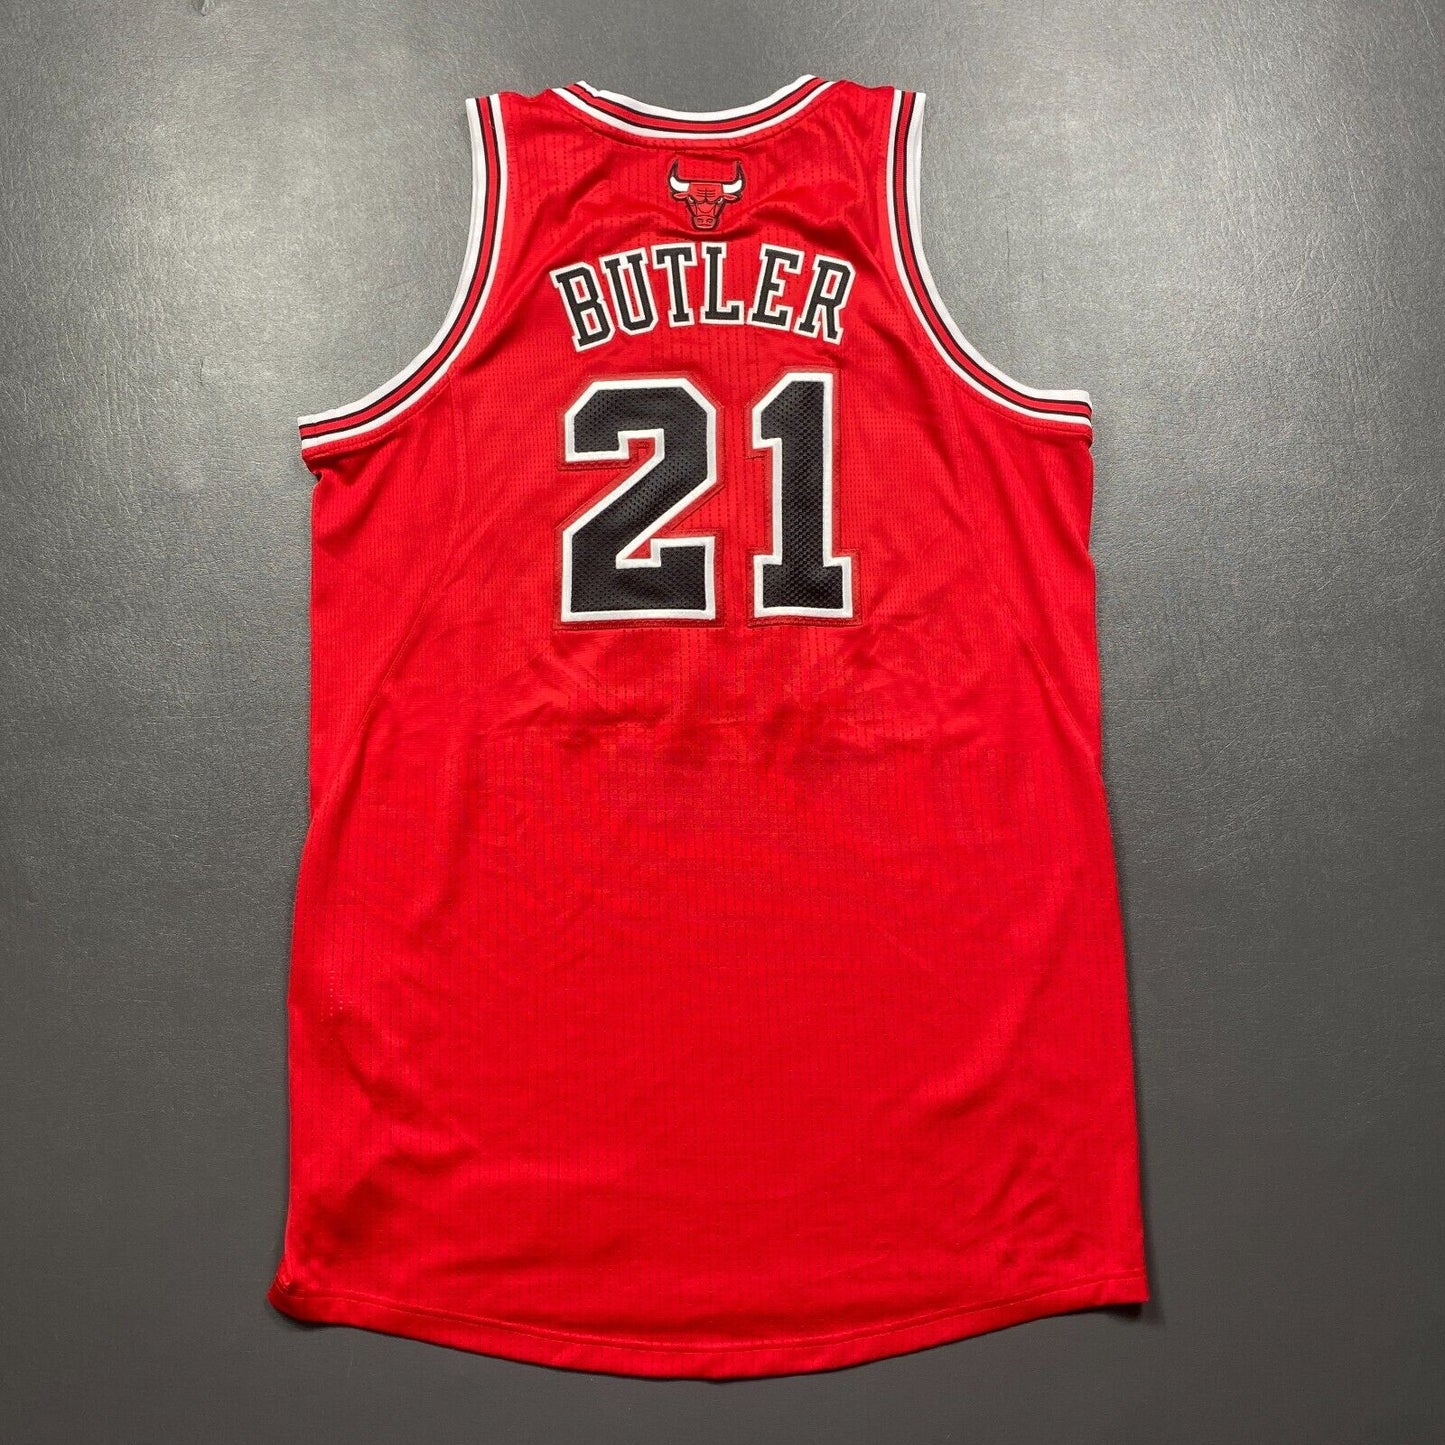 100% Authentic Jimmy Butler Adidas Rev 30 Bulls Jersey Size 3XL - Mesh # Pro Cut